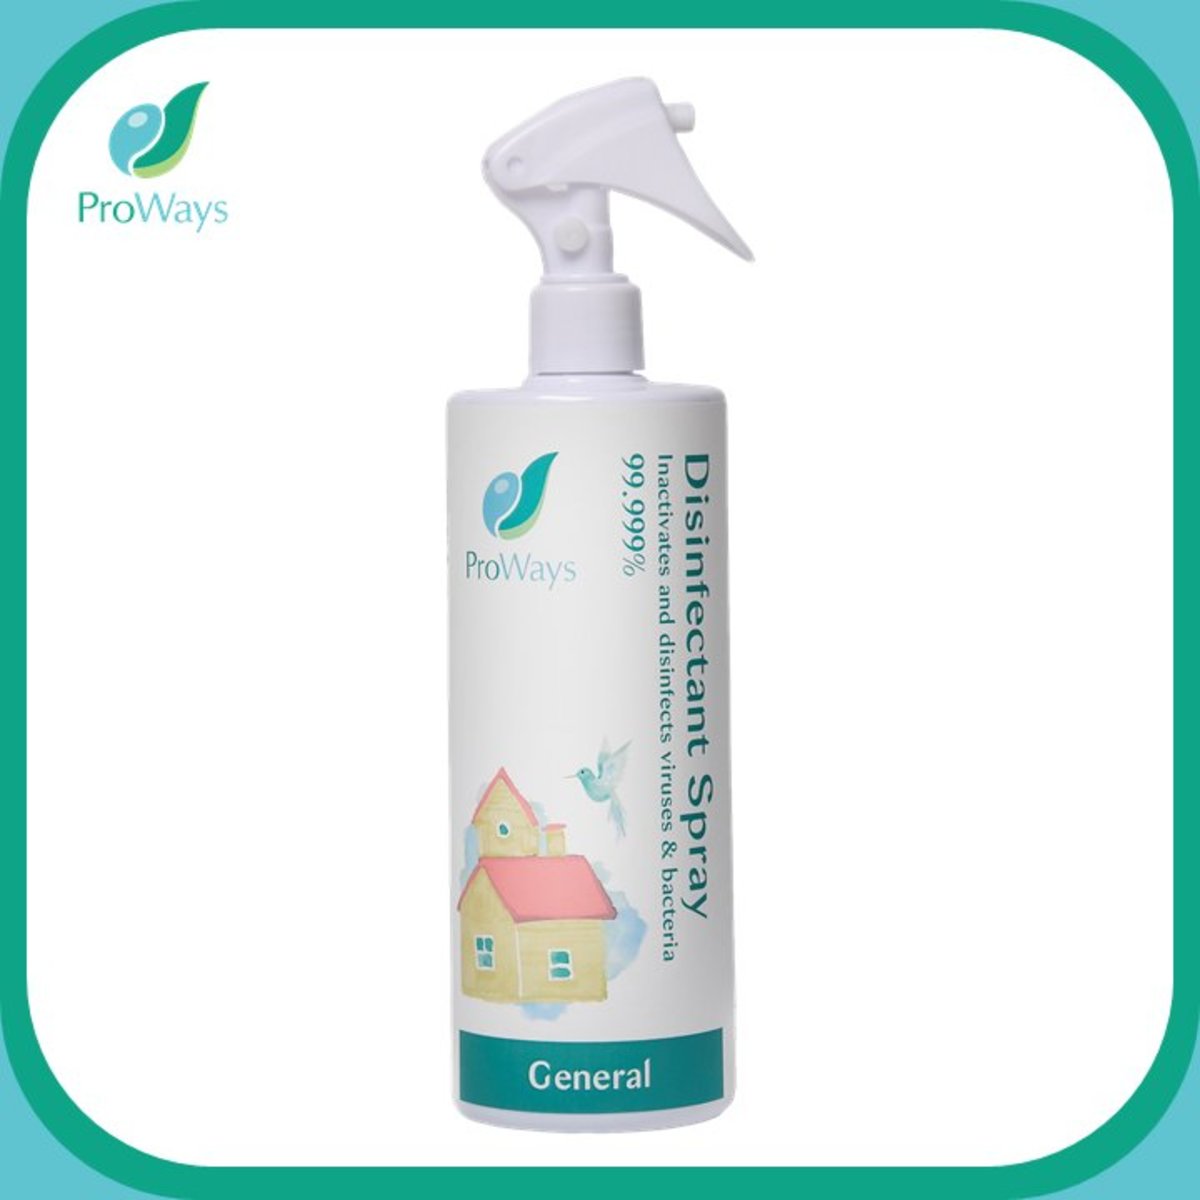 ProWays Disinfectant Spray 500ml (General)